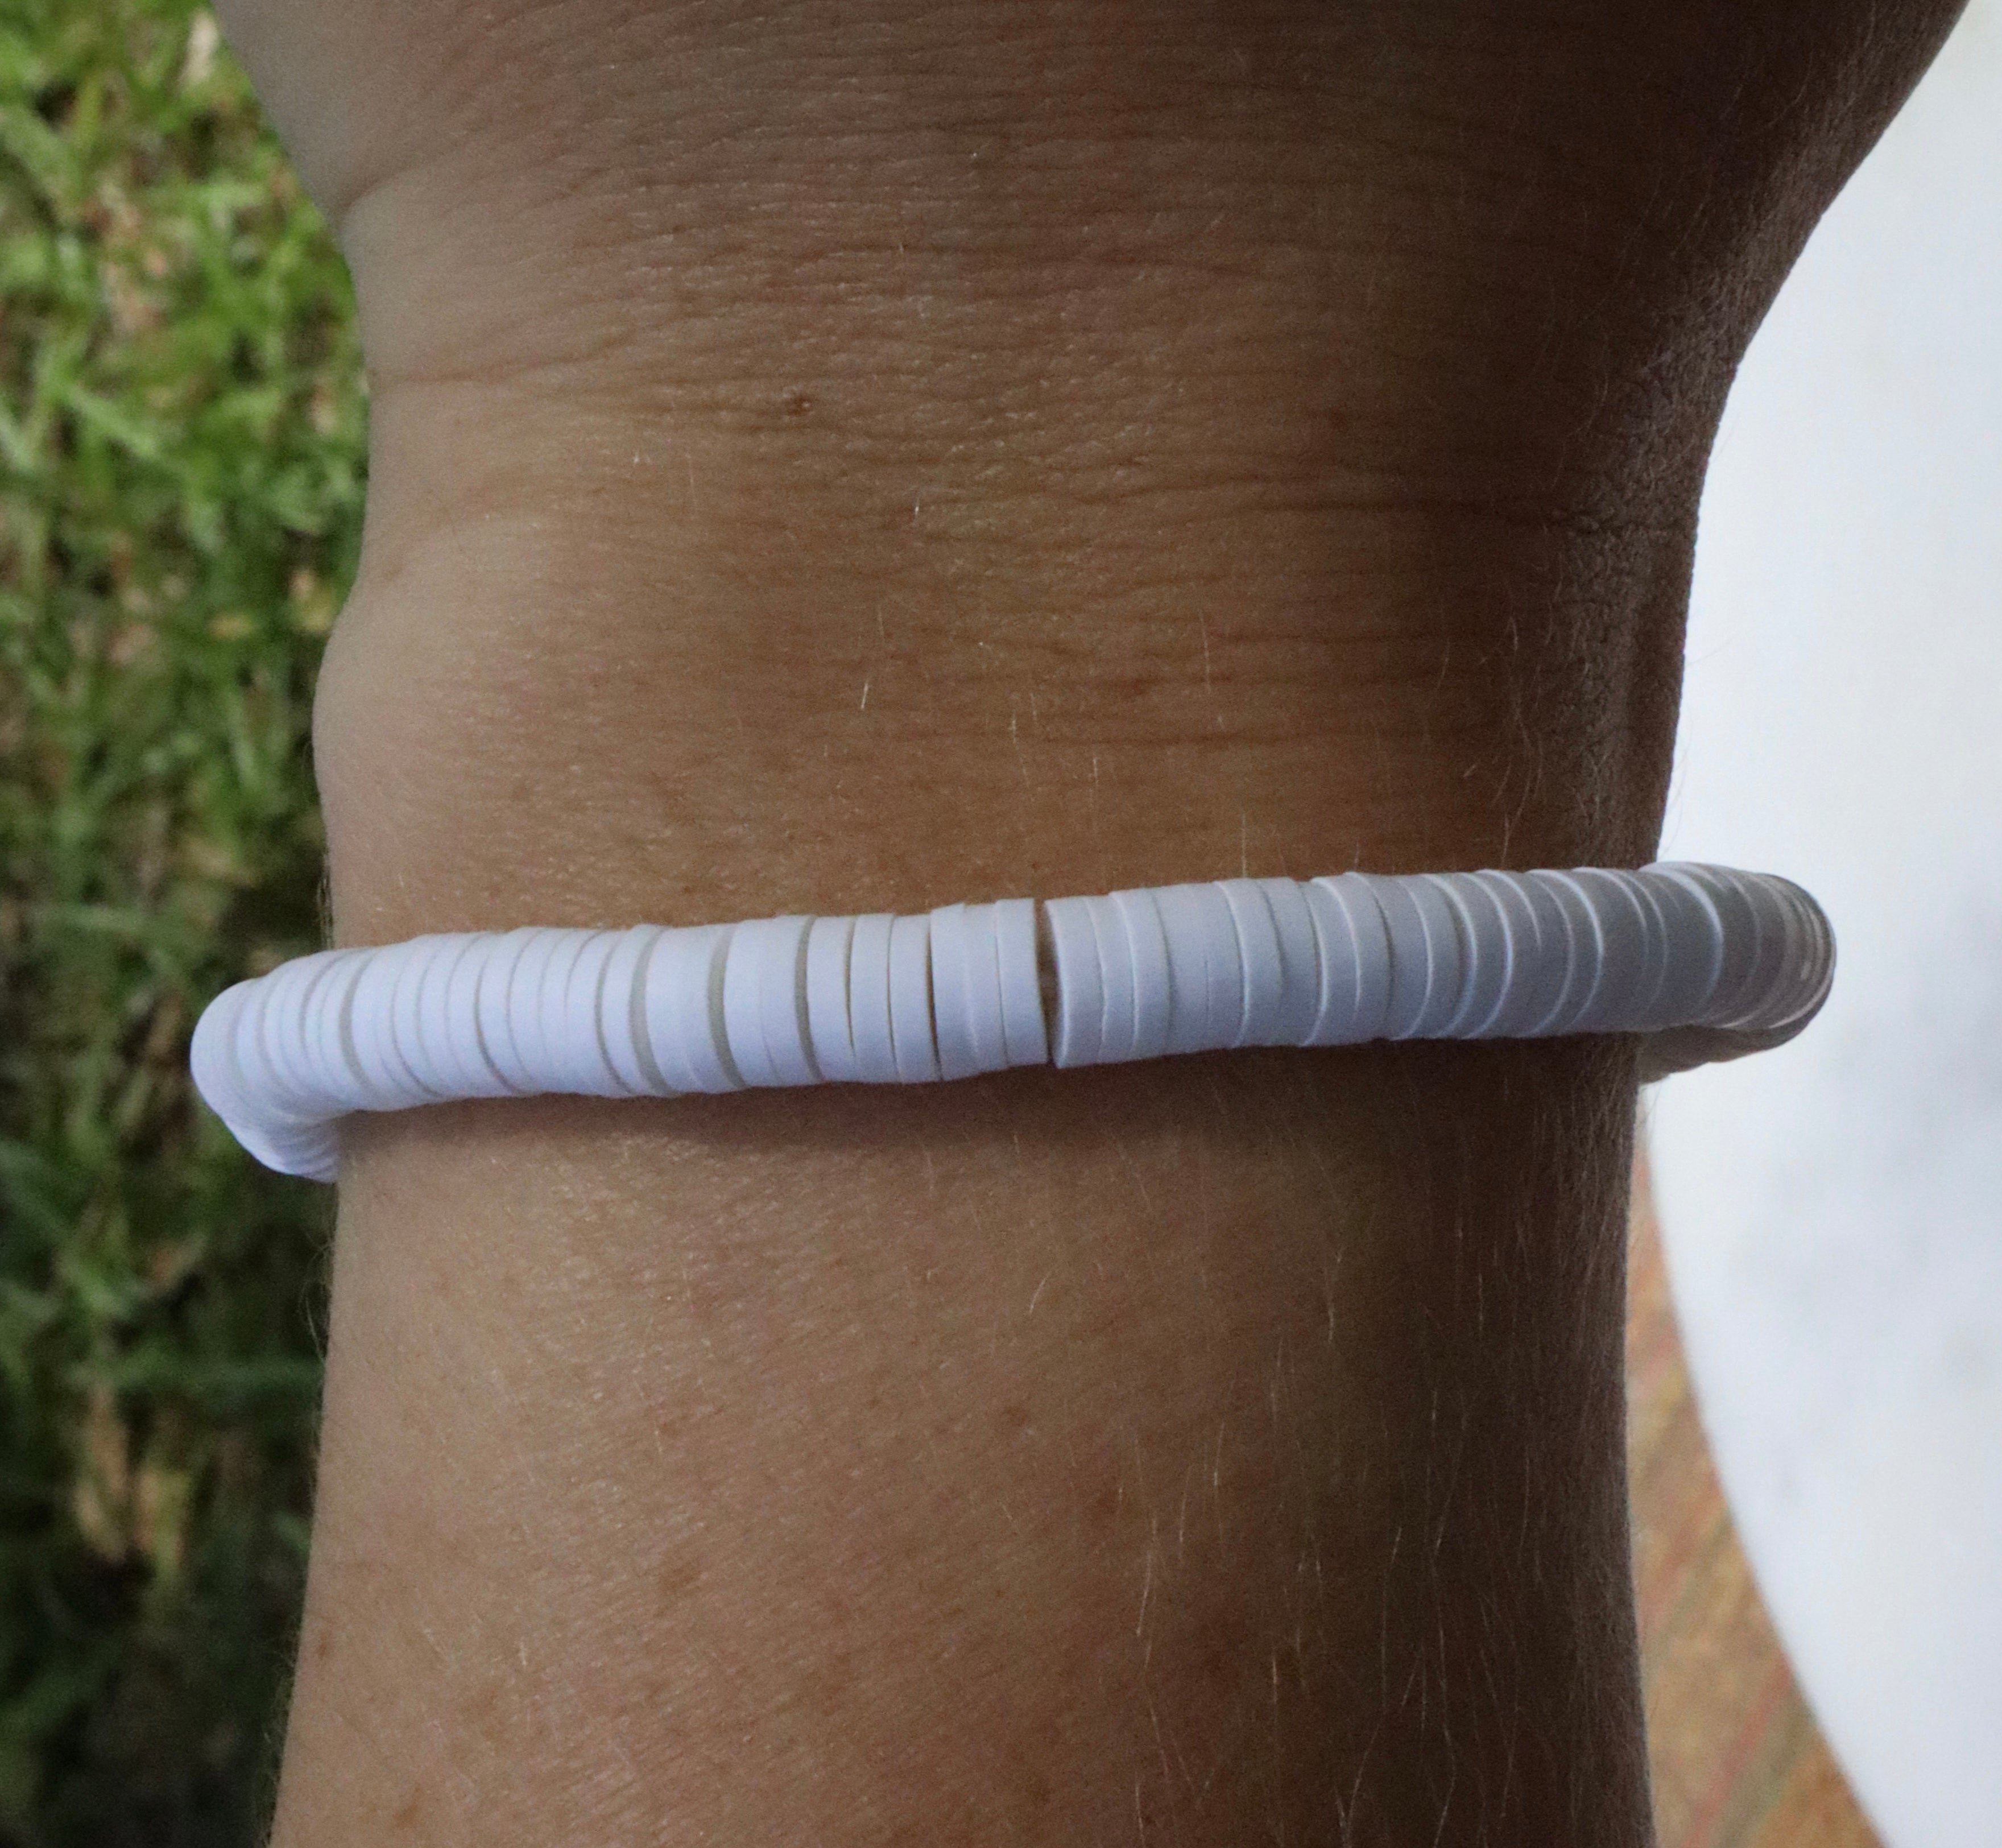 White Clay Bracelet